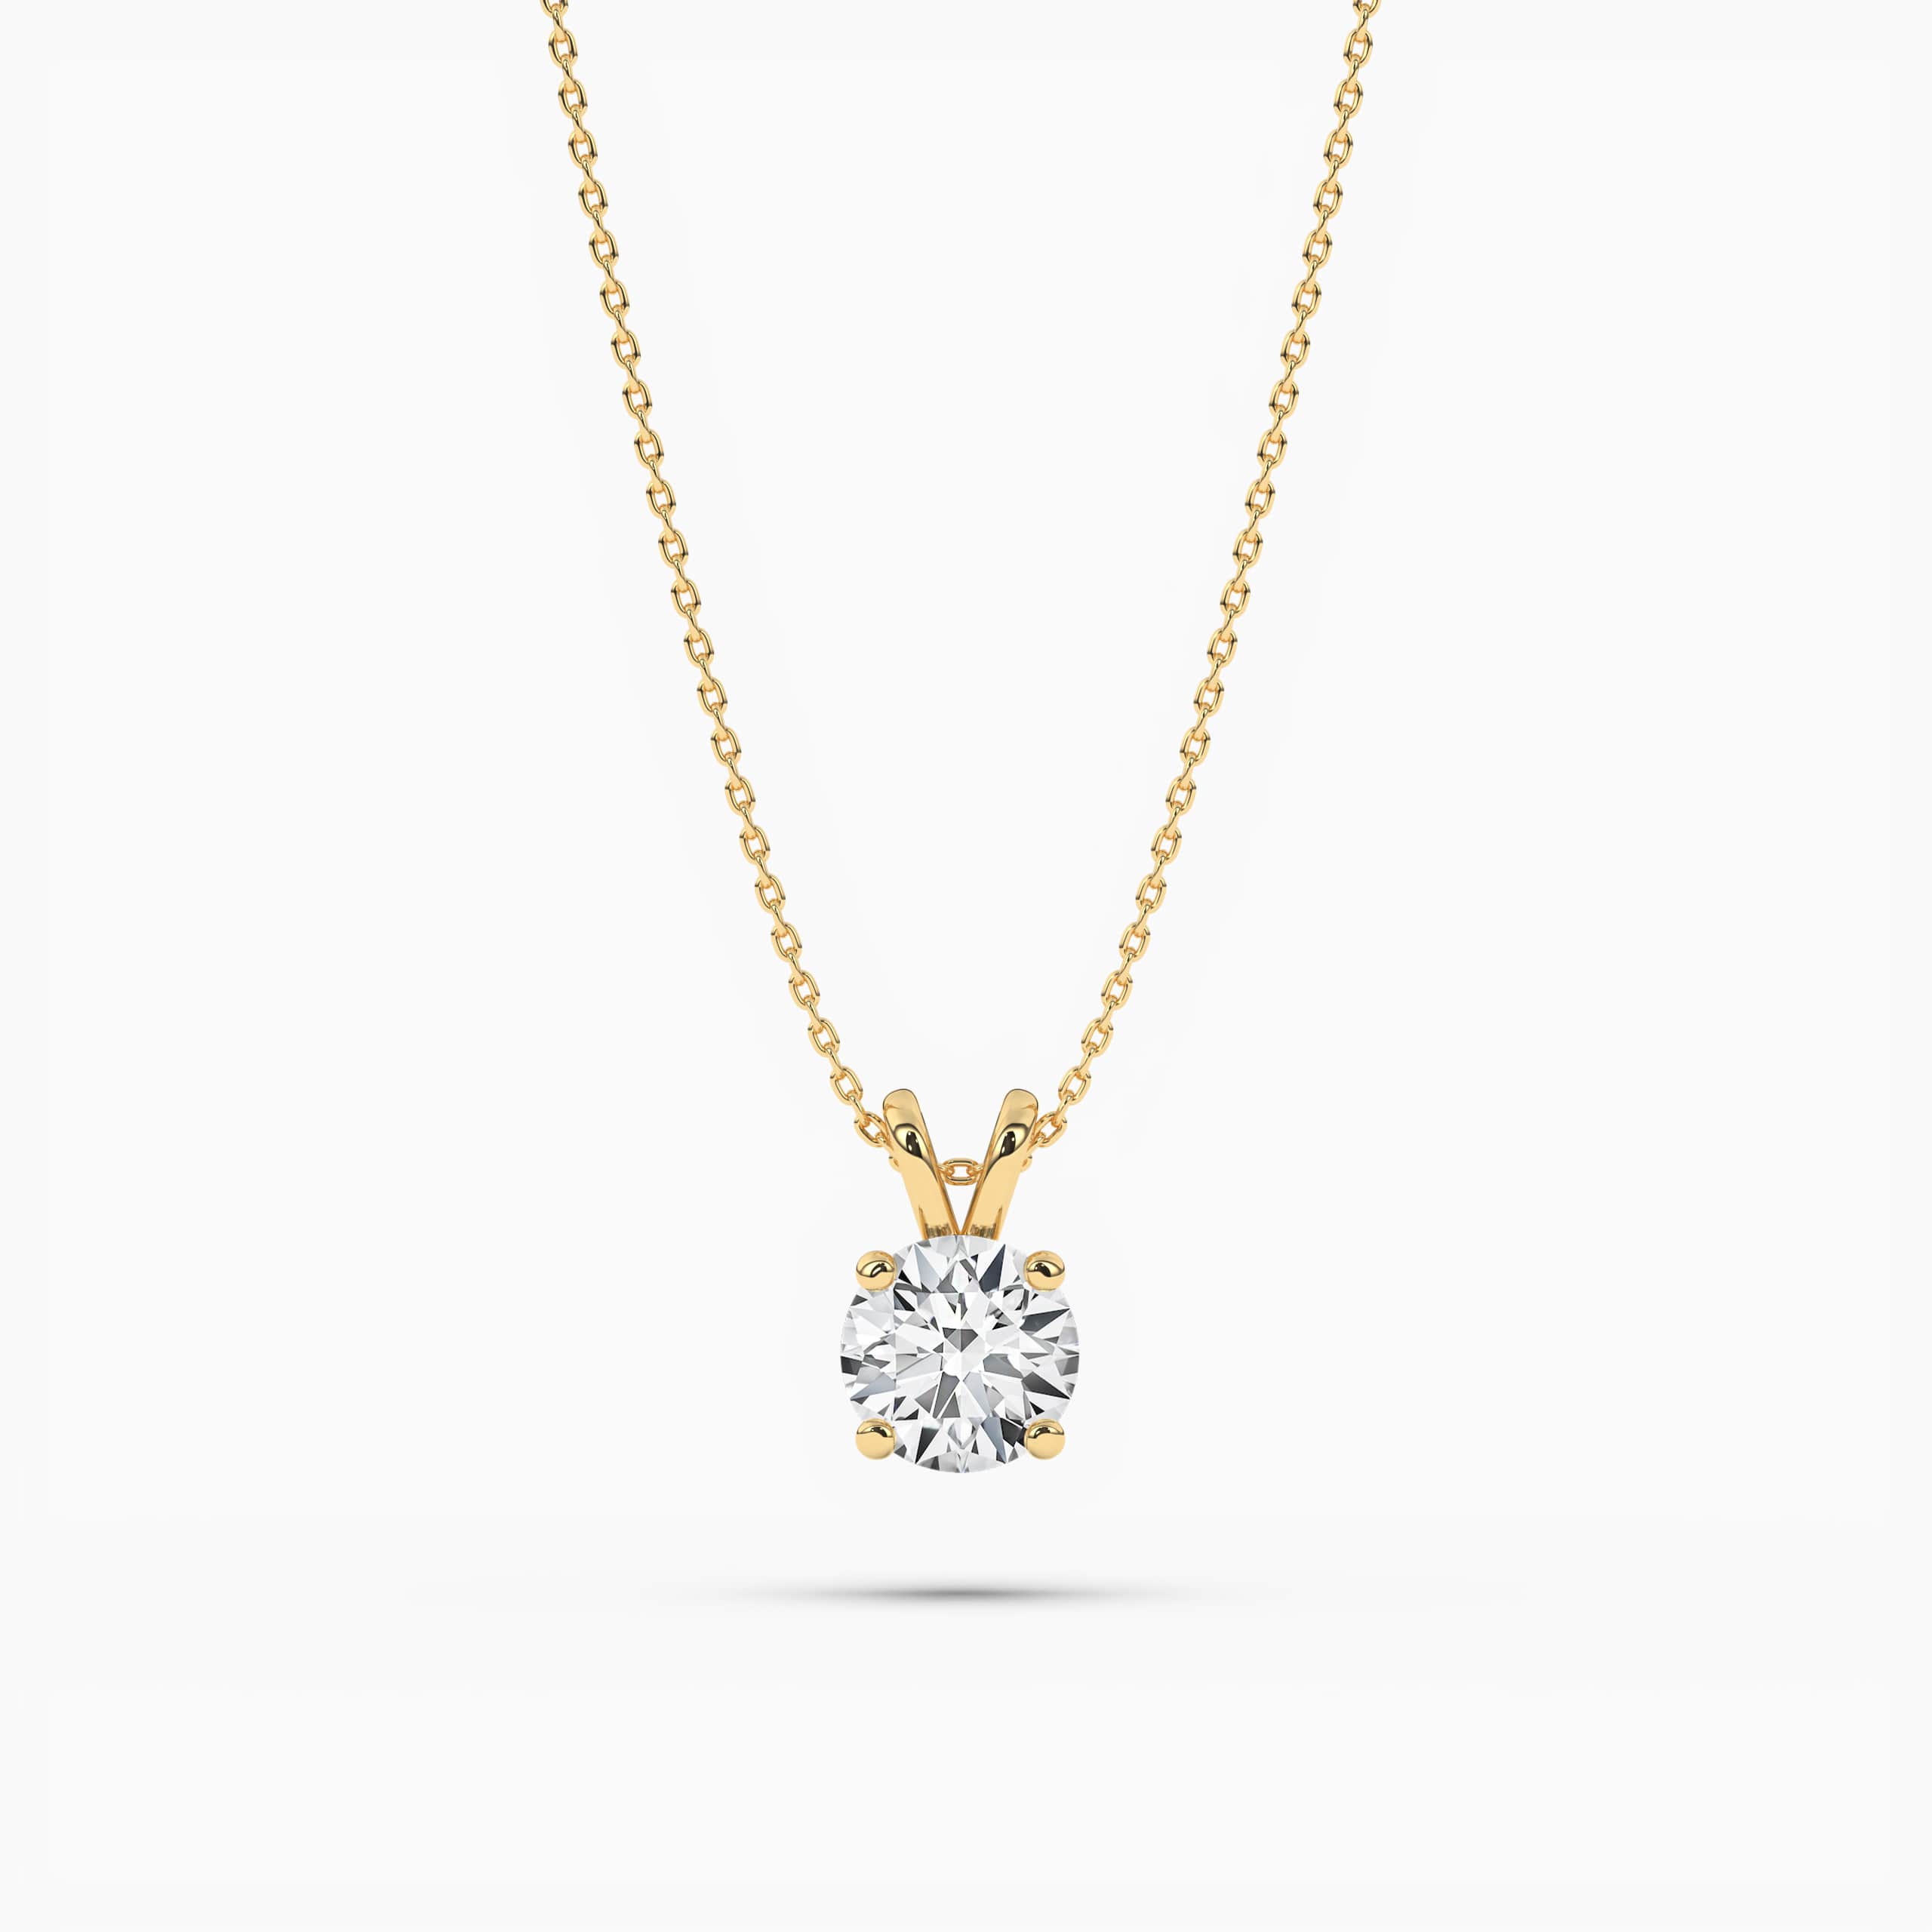  Round-Cut Diamond Solitaire 4-Prong Pendant Necklace